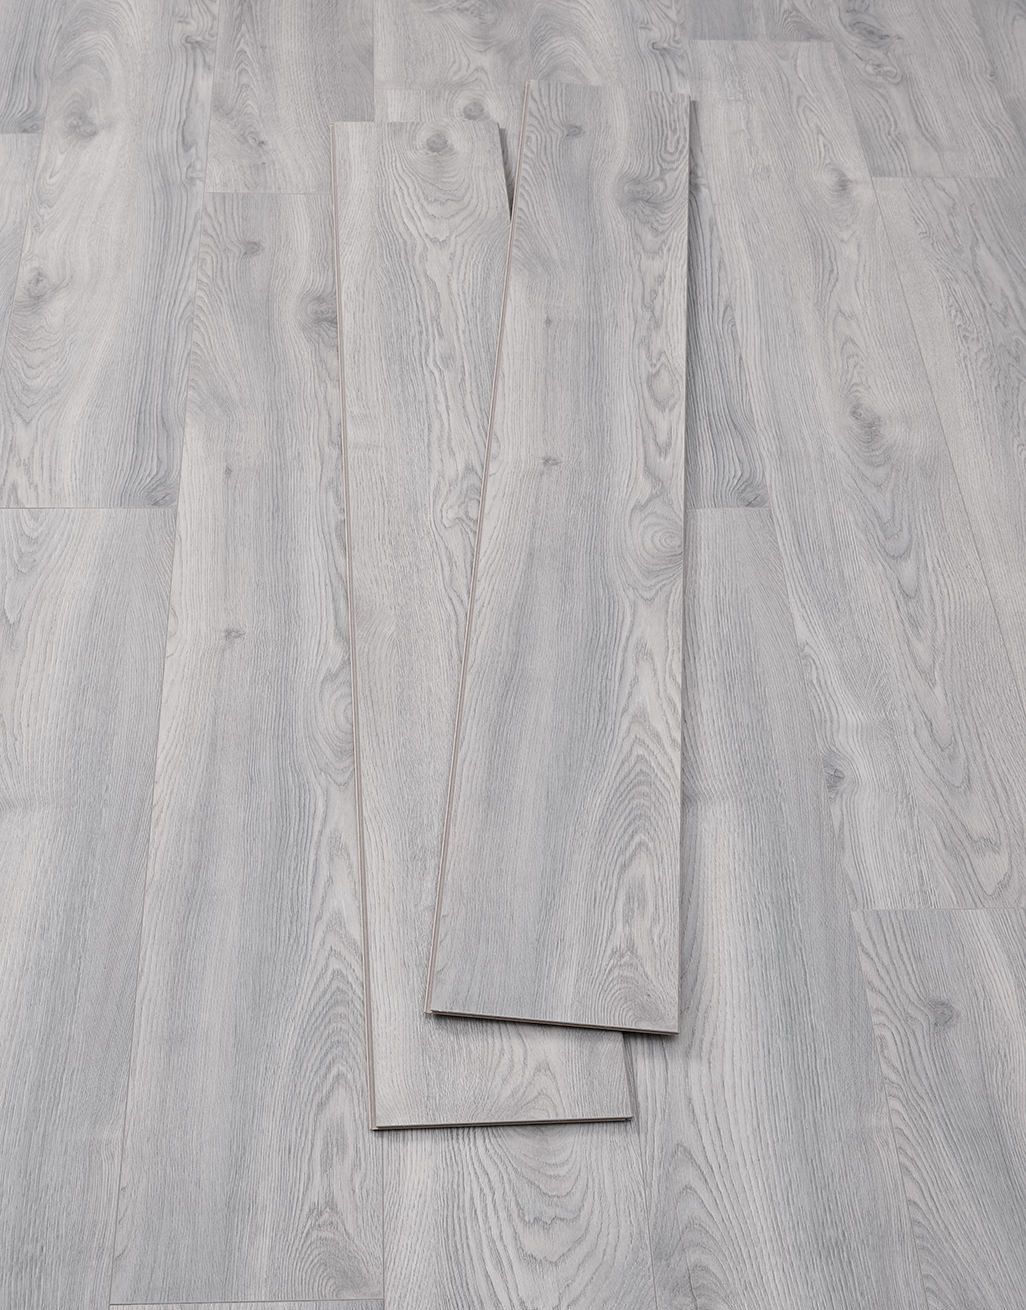 Sienna Long - Frosted Oak Laminate Flooring 3